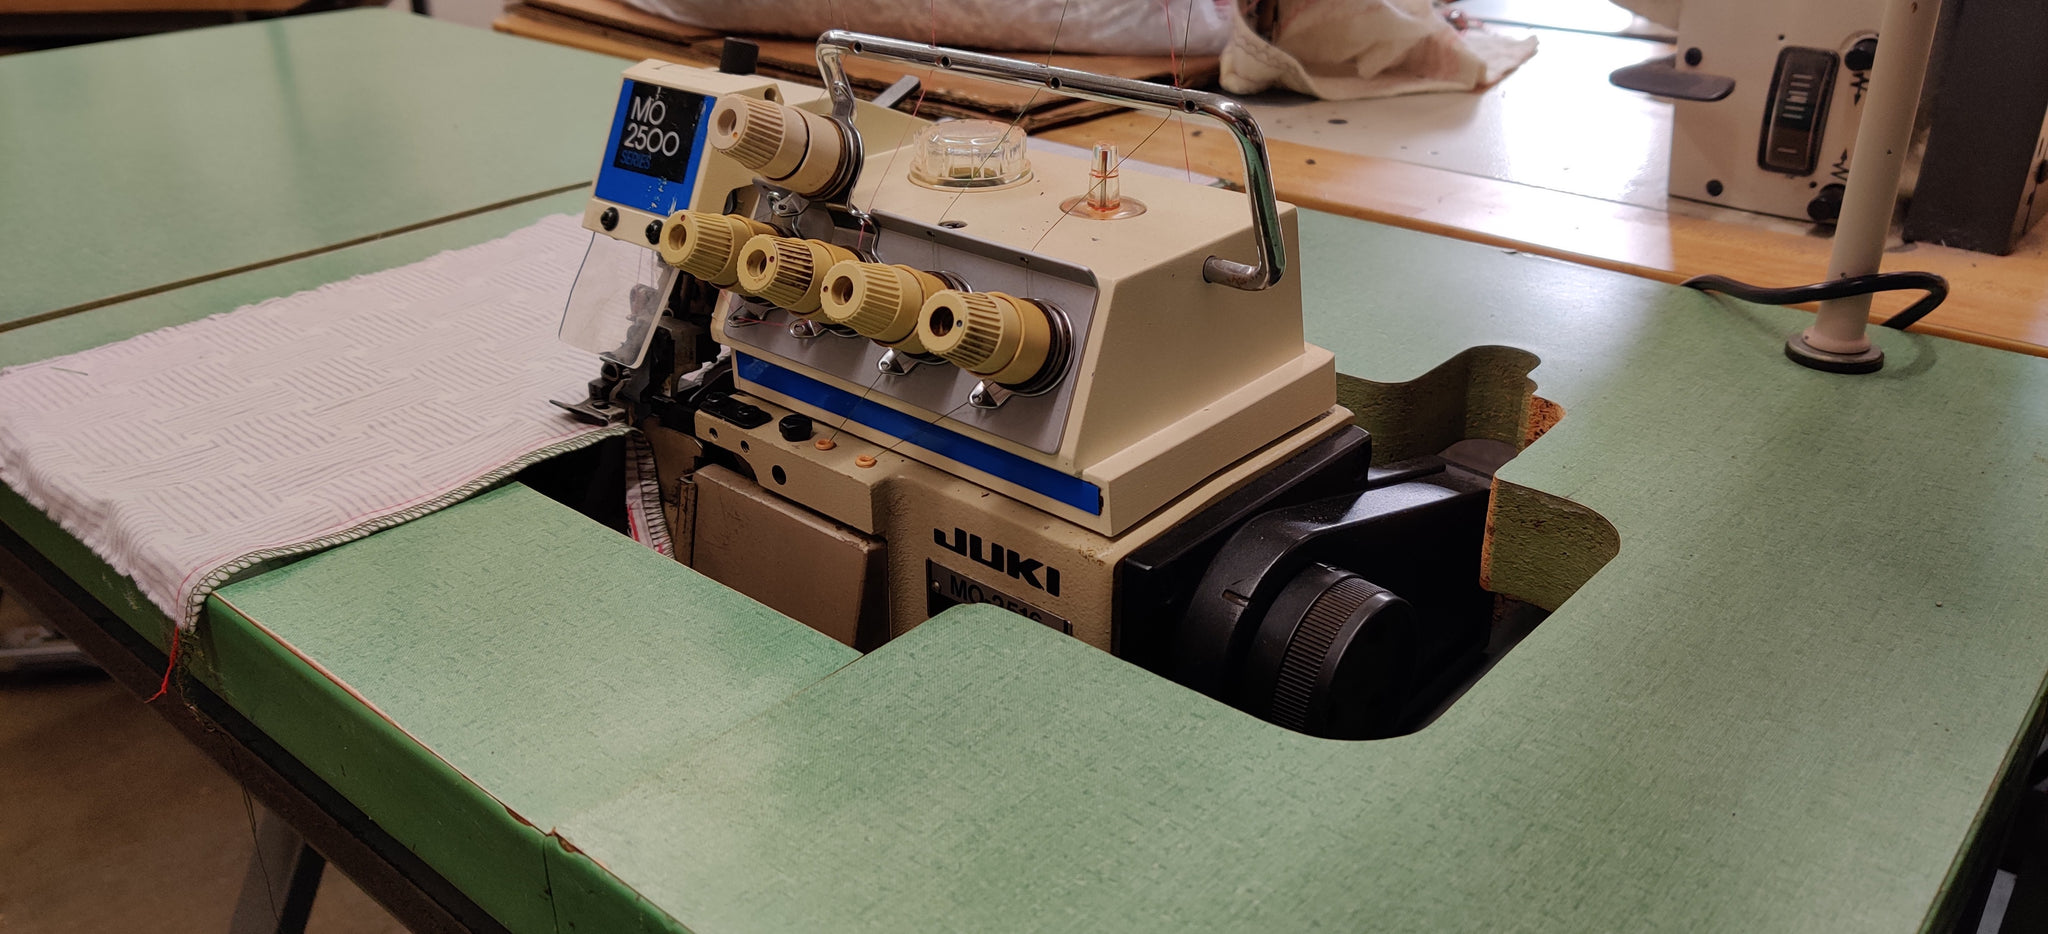 Juki MO-2516 6 Threads Overlock (Serger) Sewing Machine